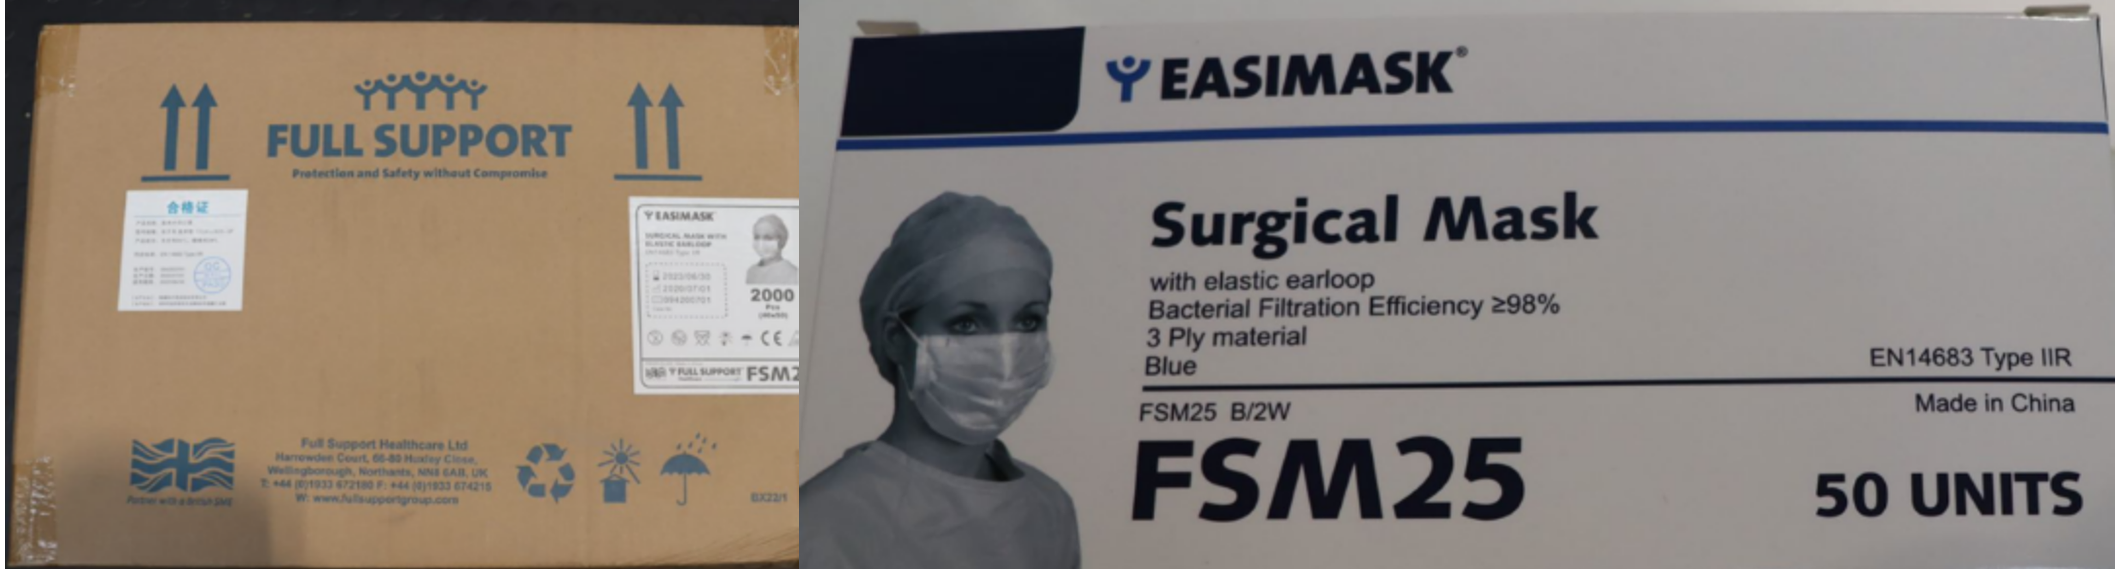 Easimask Product Box Photo Examples